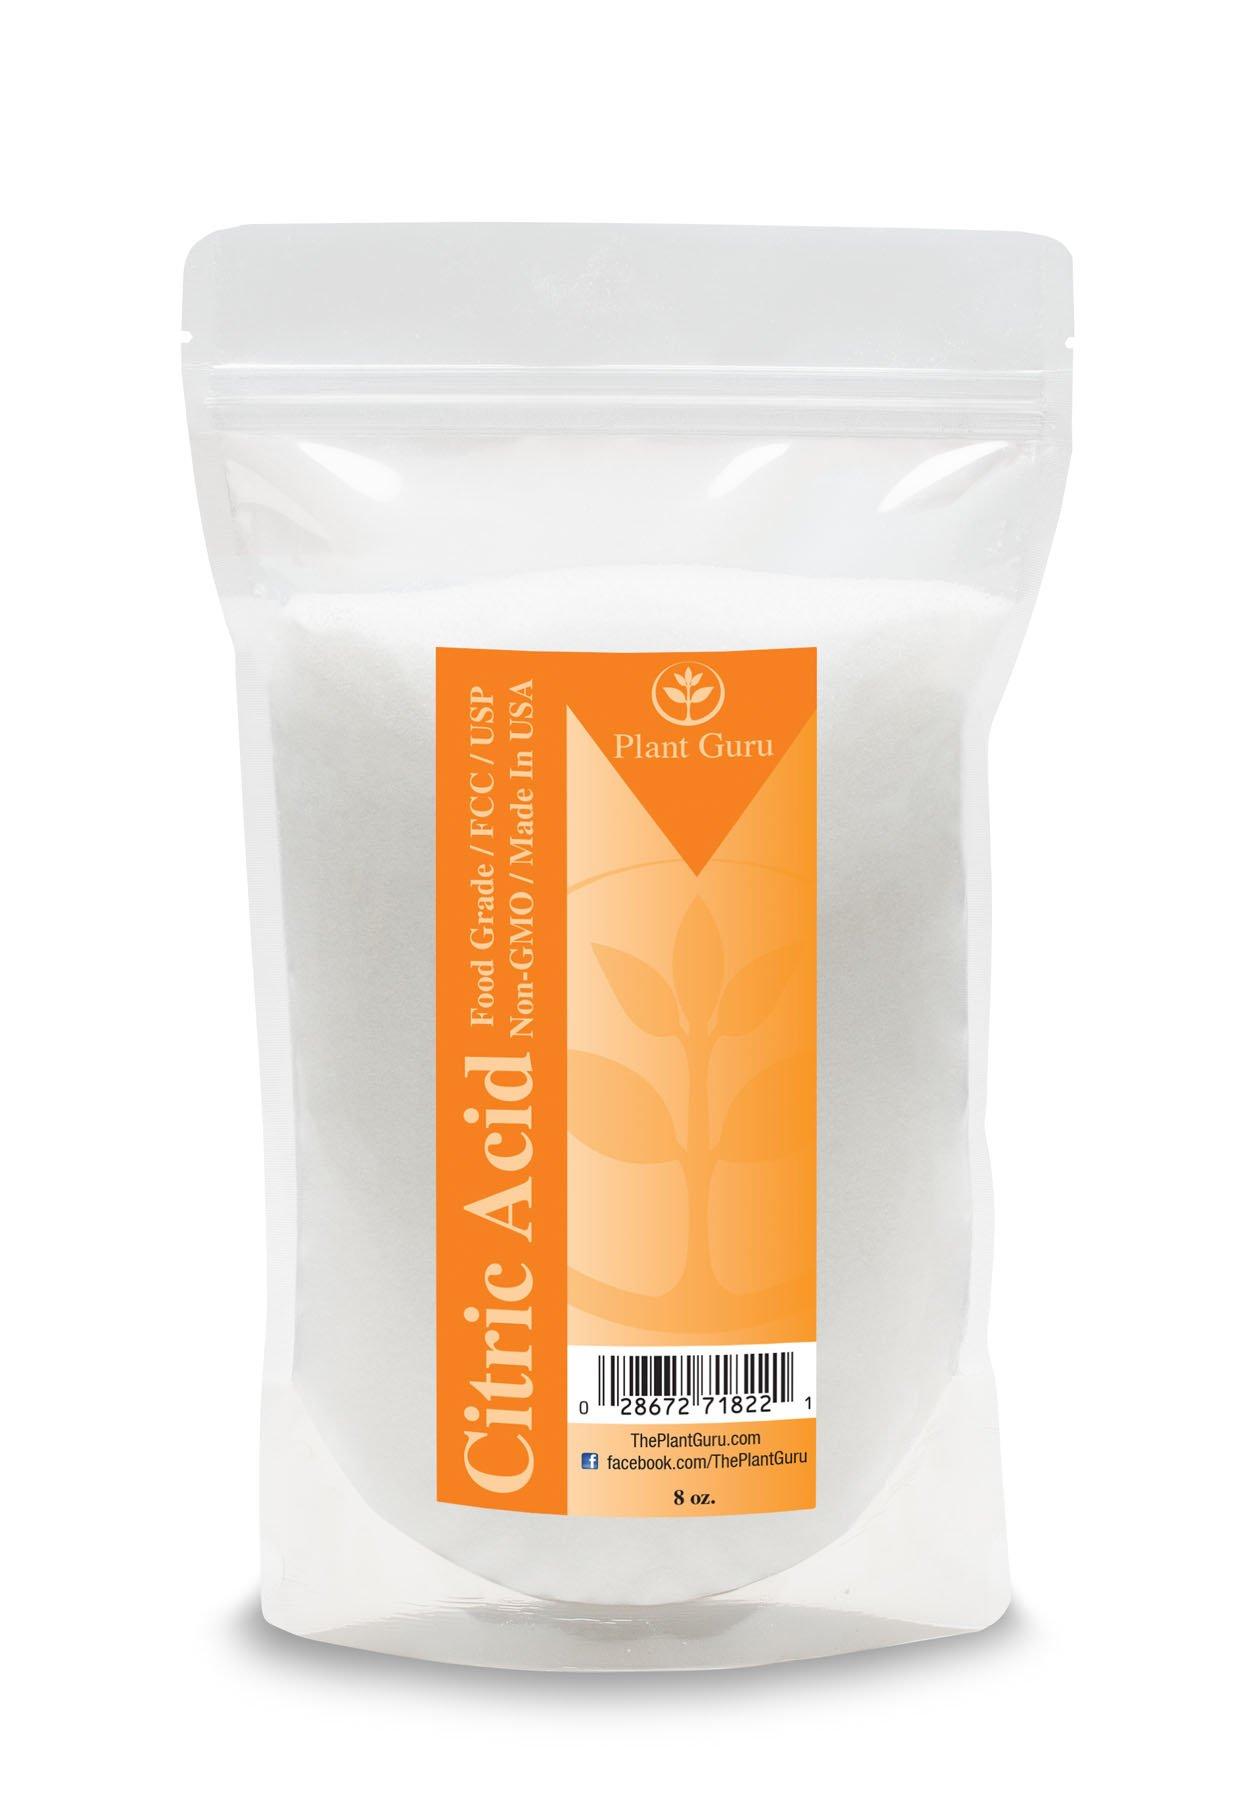 Onuva Citric Acid, 20 Pound (9 kg),Pure Food Grade,Non-GMO Project Verified,Flavor Enhancer & All-Natural Preservative | Fragrance Free Citric Acid